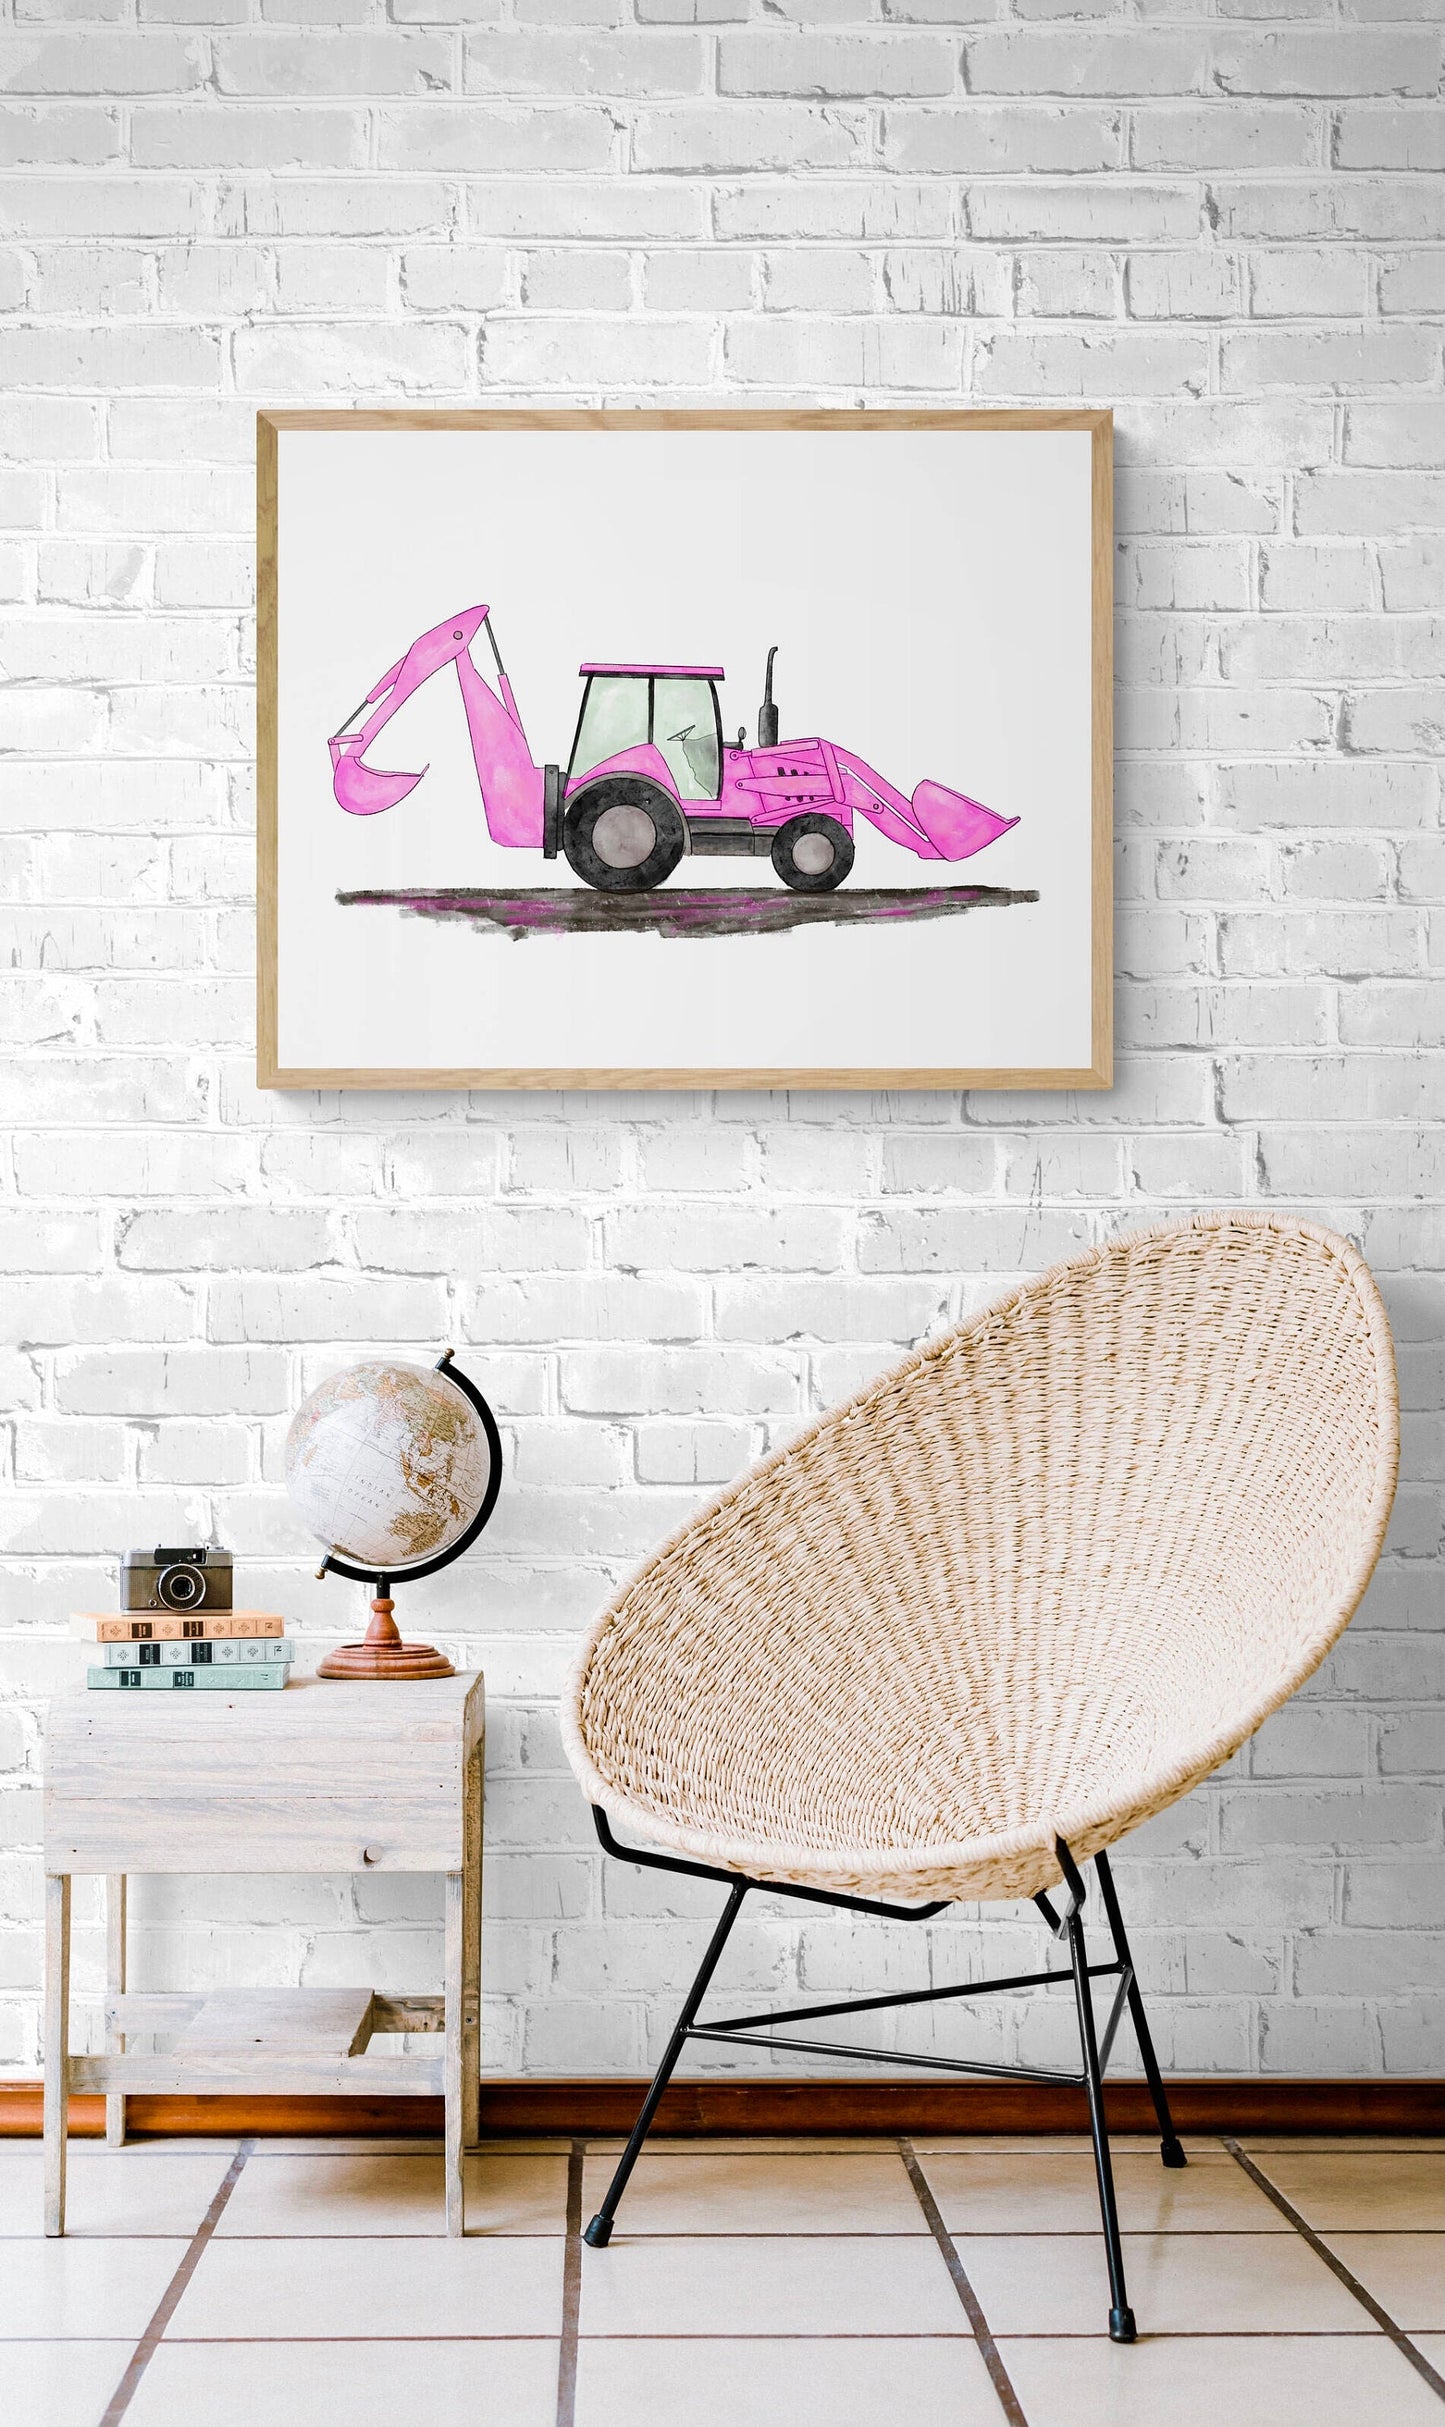 Pink Backhoe Wall Art, Backhoe Loader Painting, Girls Room Construction Print, Construction Vehicles Poster, Nursery Gift, Loader Excavator